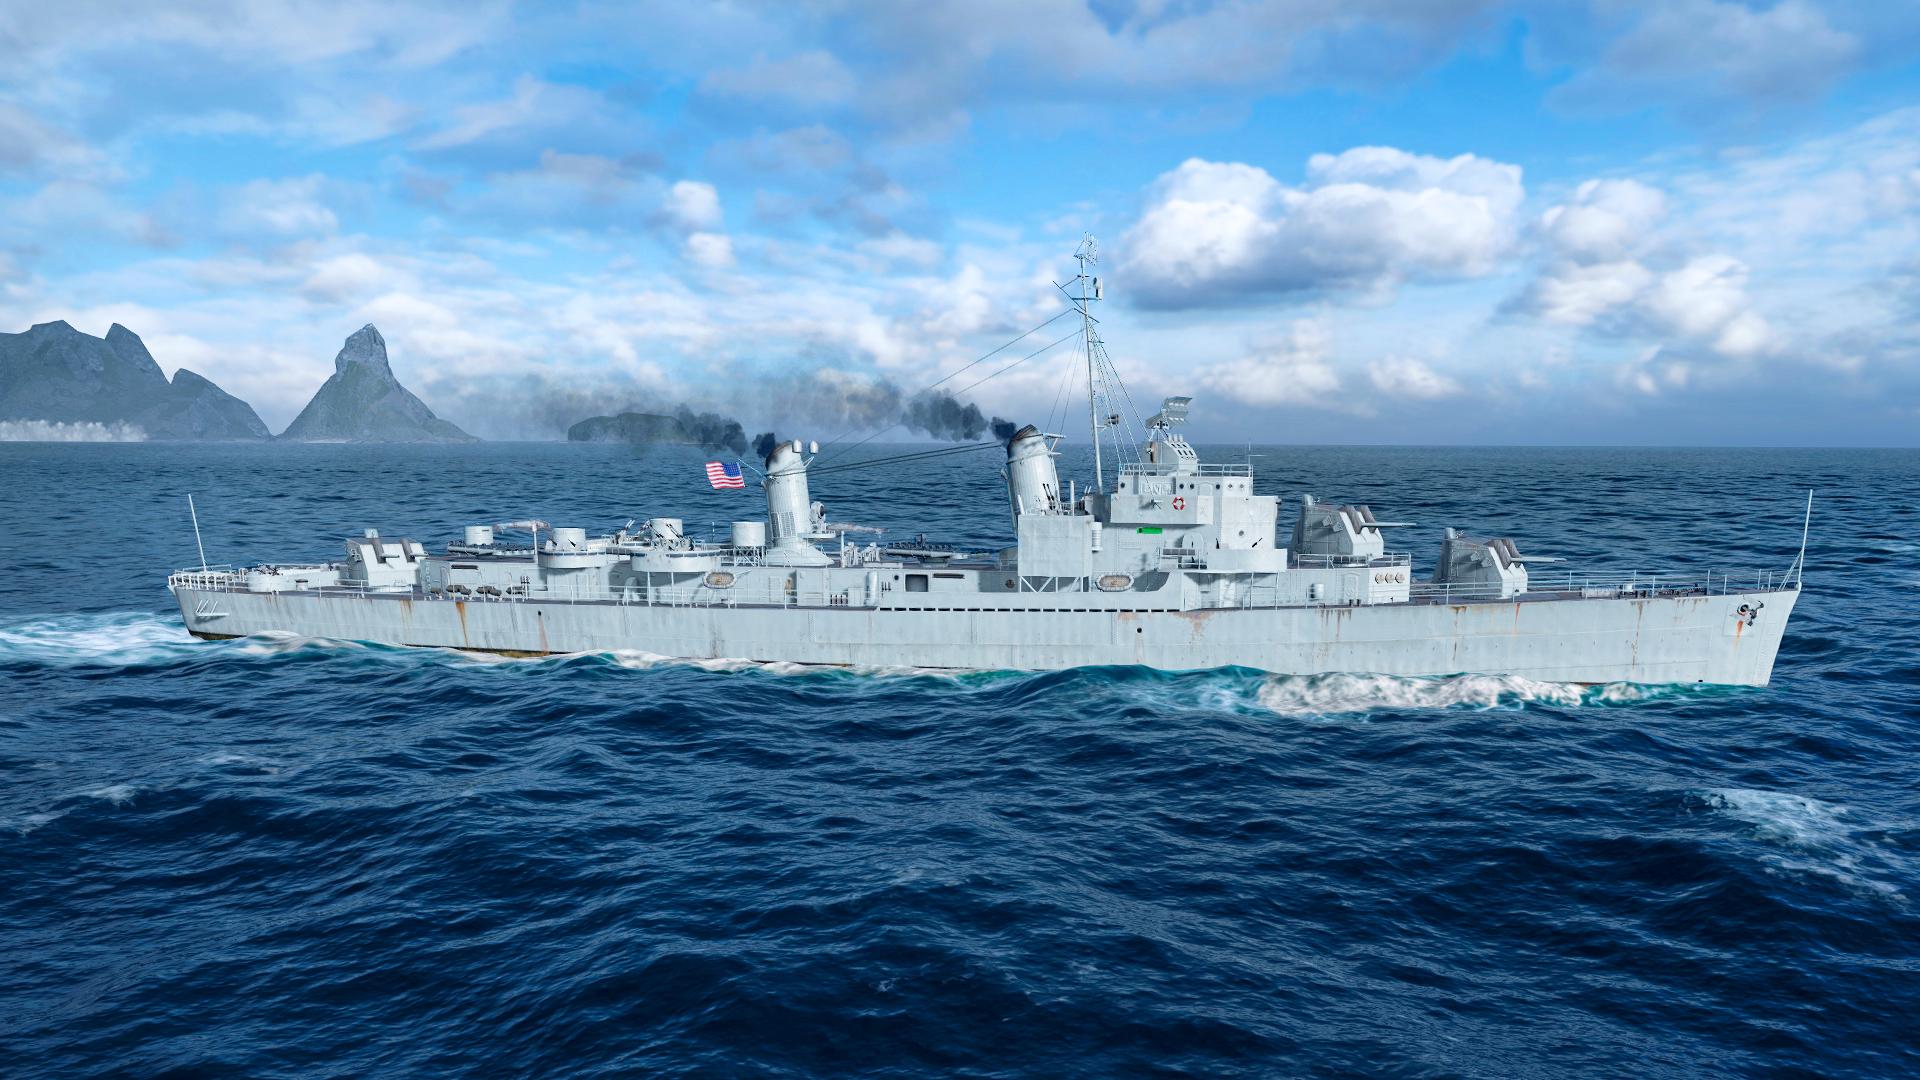 World Of Warships Legends ソ連とイギリスの巡洋艦が登場 2隻のレジェンダリー艦艇が完全実装 聖パトリックの日 に纏わる 特別コンテンツが到来 ヘイグ 国内最大級の総合ゲームメディア 攻略 Wiki コミュニティ